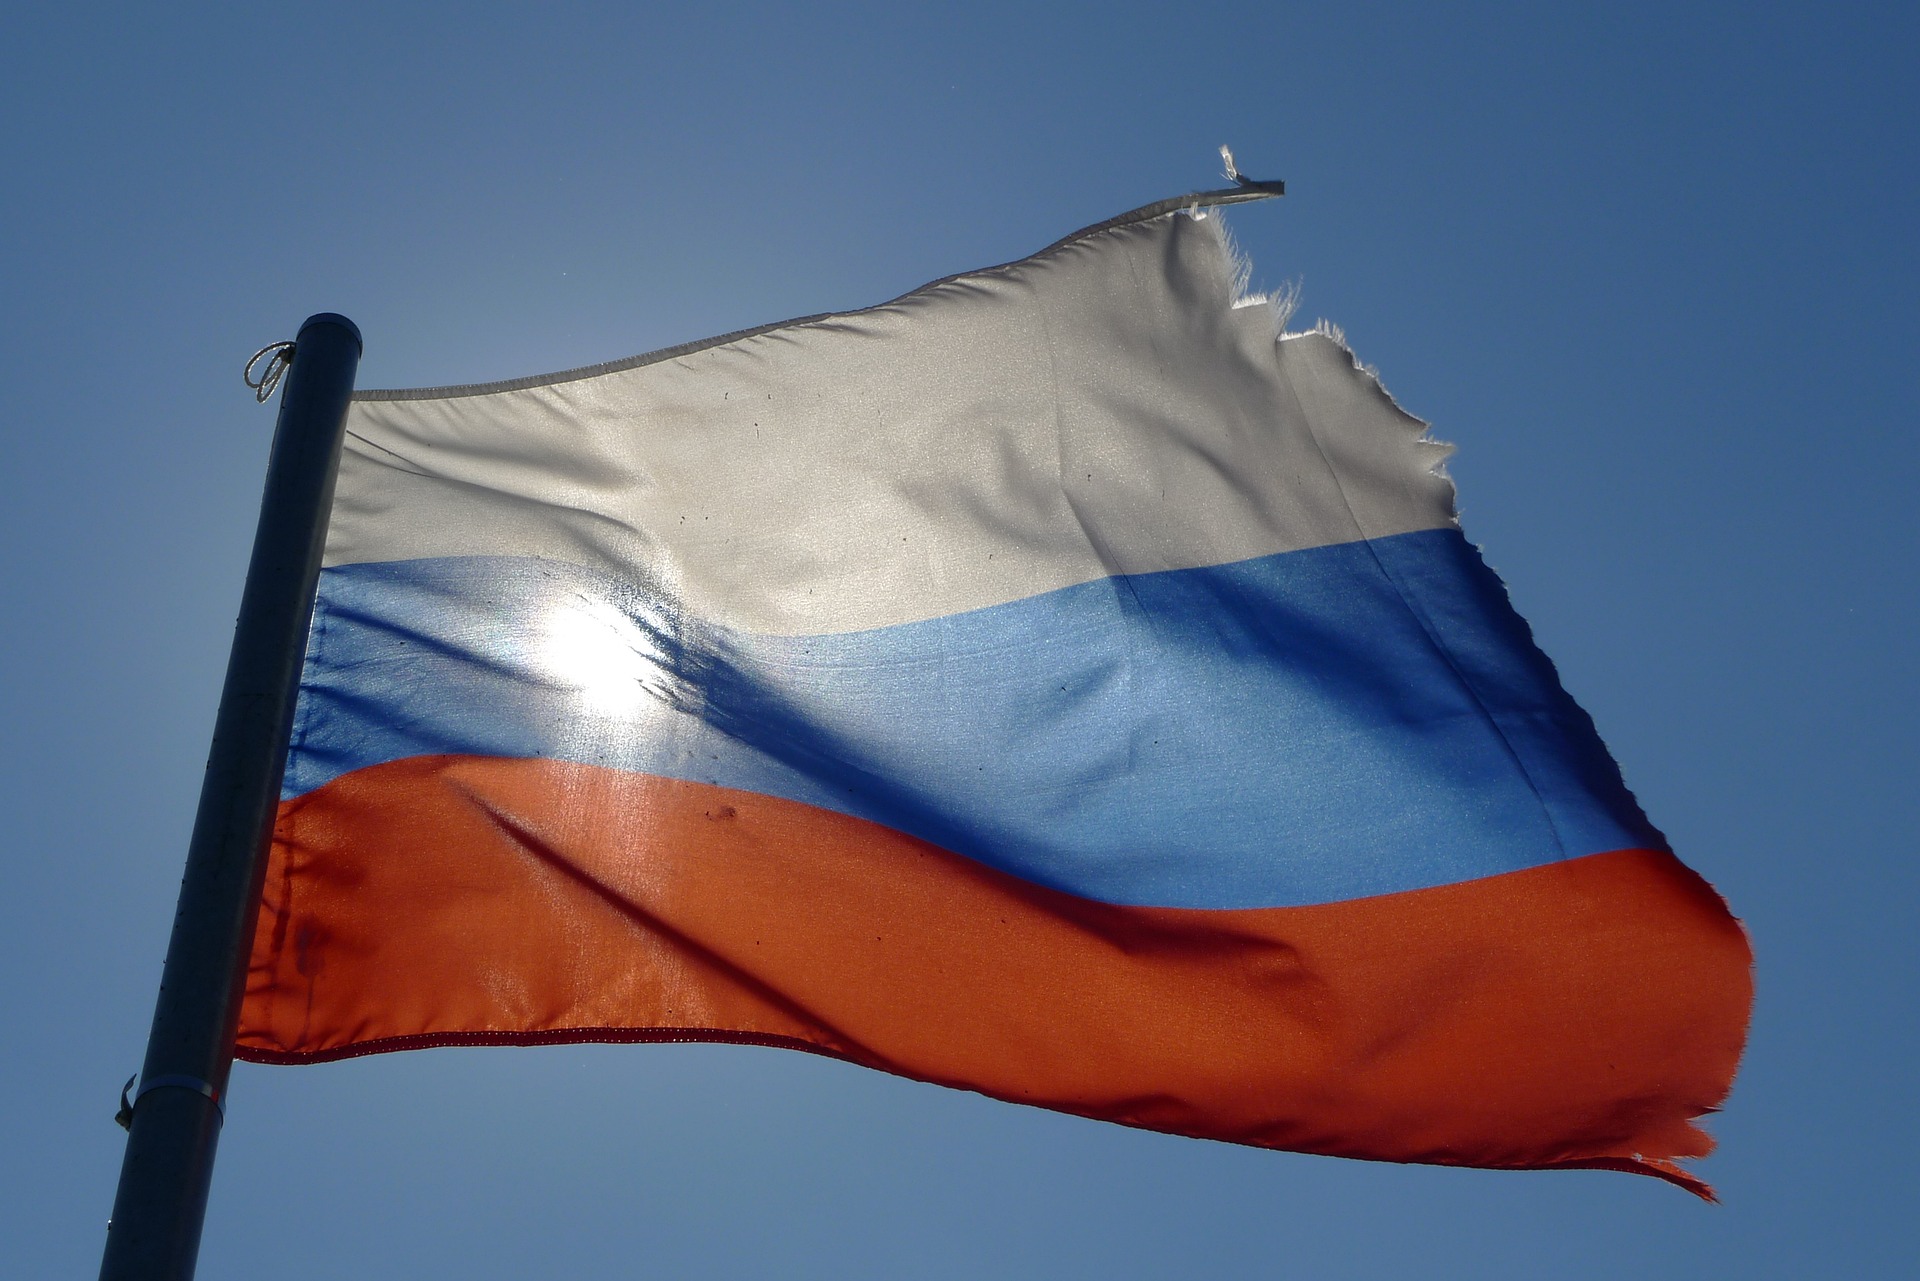 Financial Crime Watchdog FATF Suspends Russia over Ukraine War